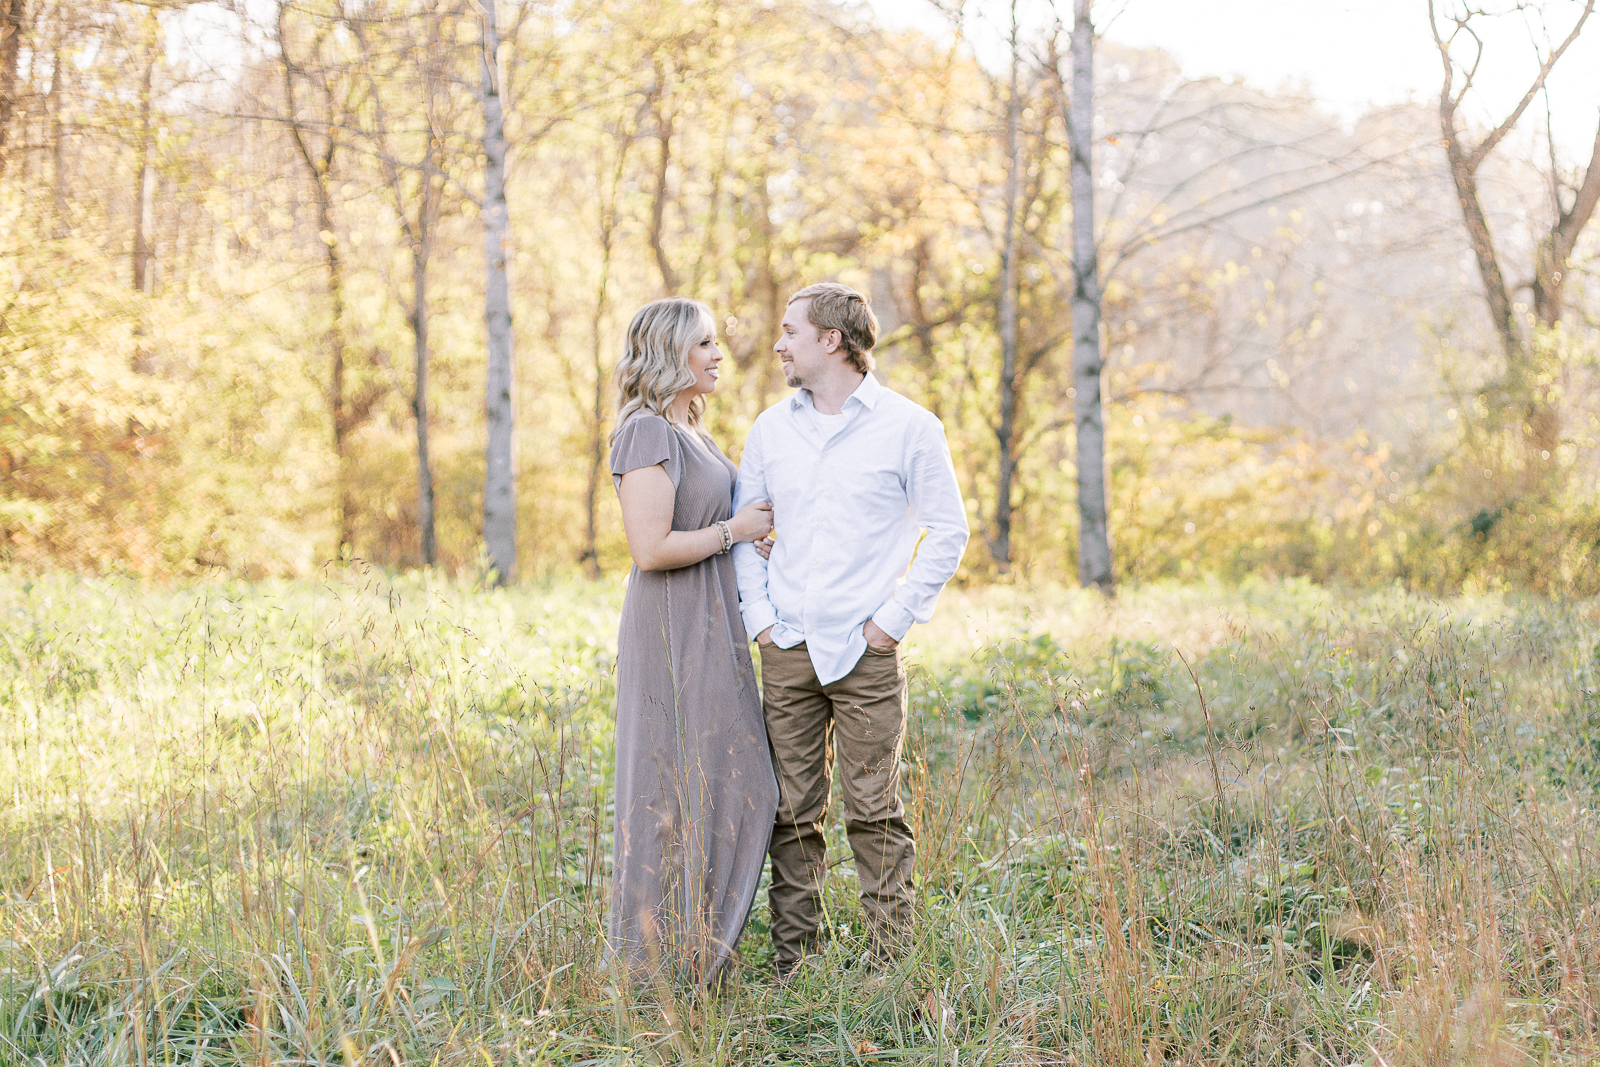 Classic joyful Virginia couple pose for engagement session in romantic outdoor location